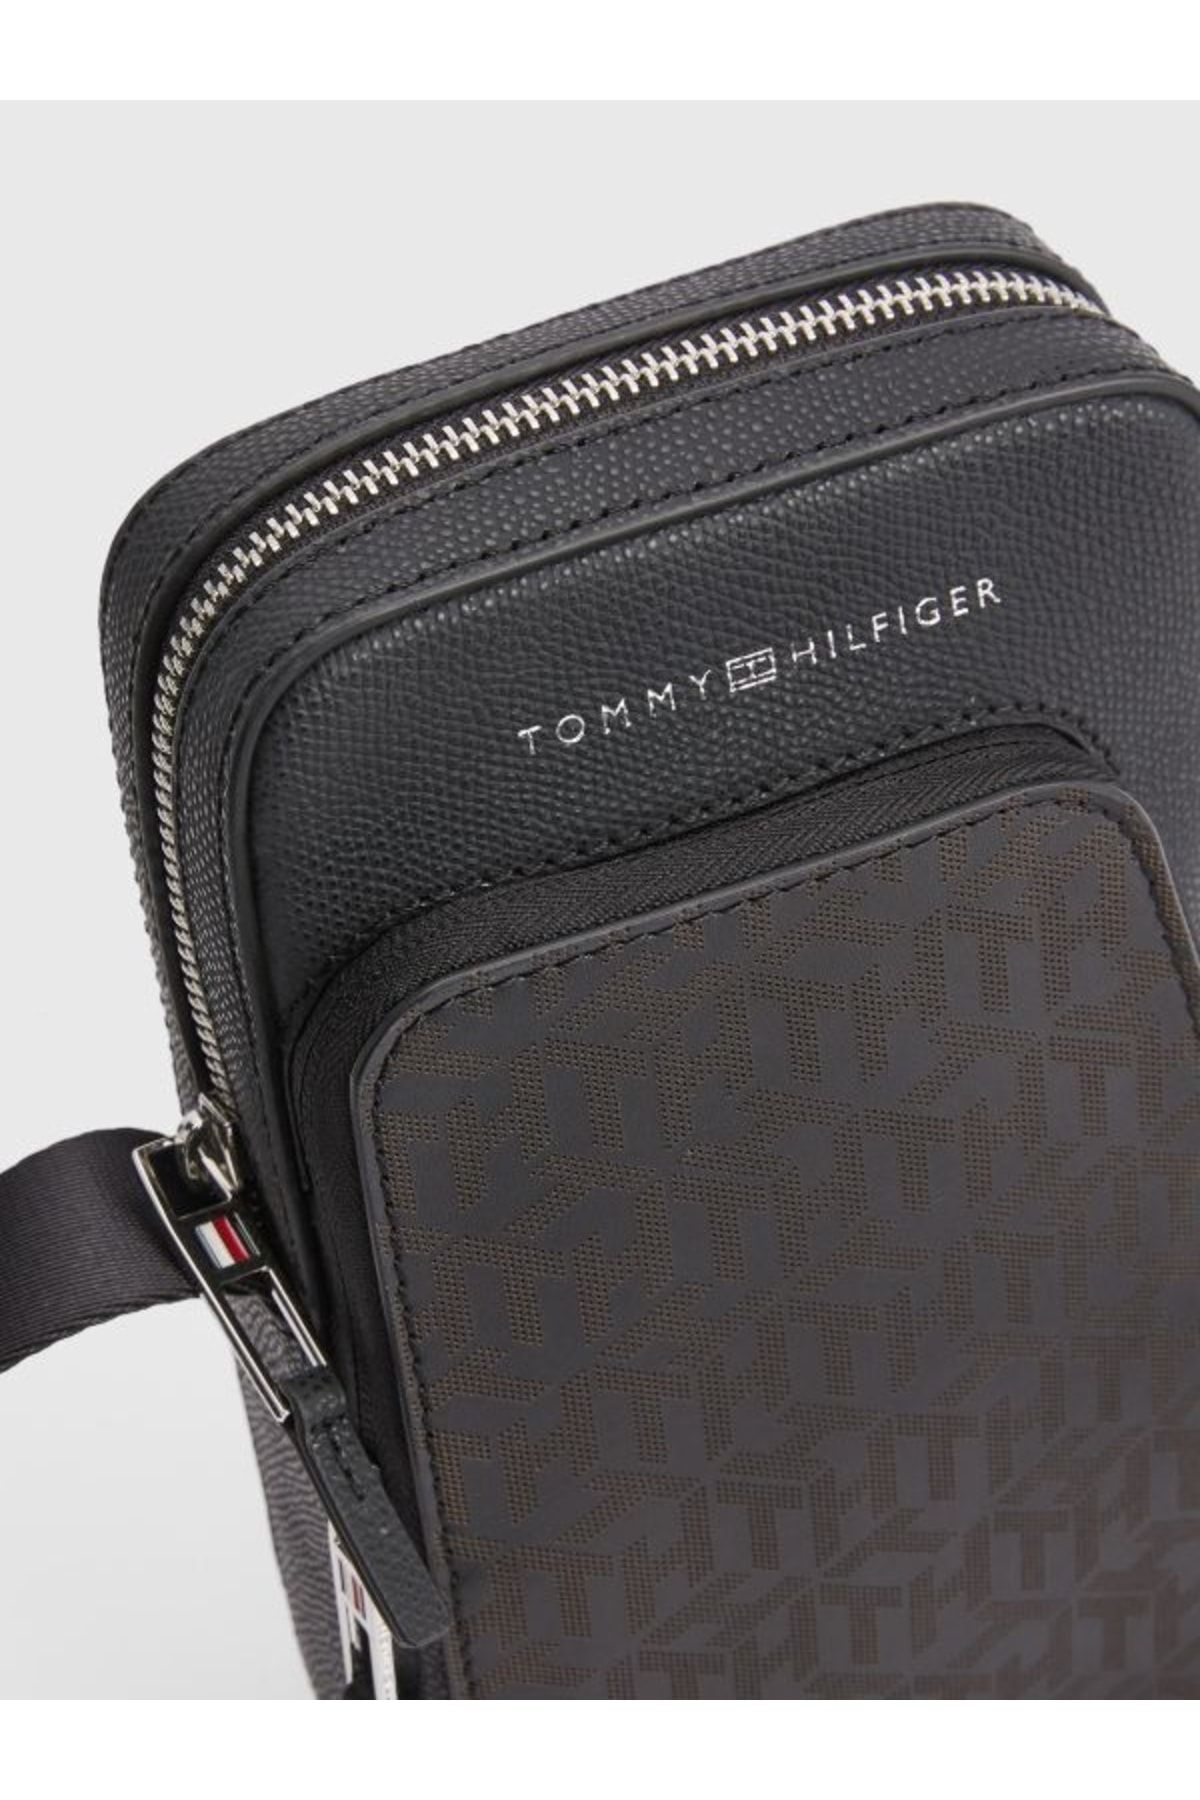 Tommy Hilfiger کیف مردانه